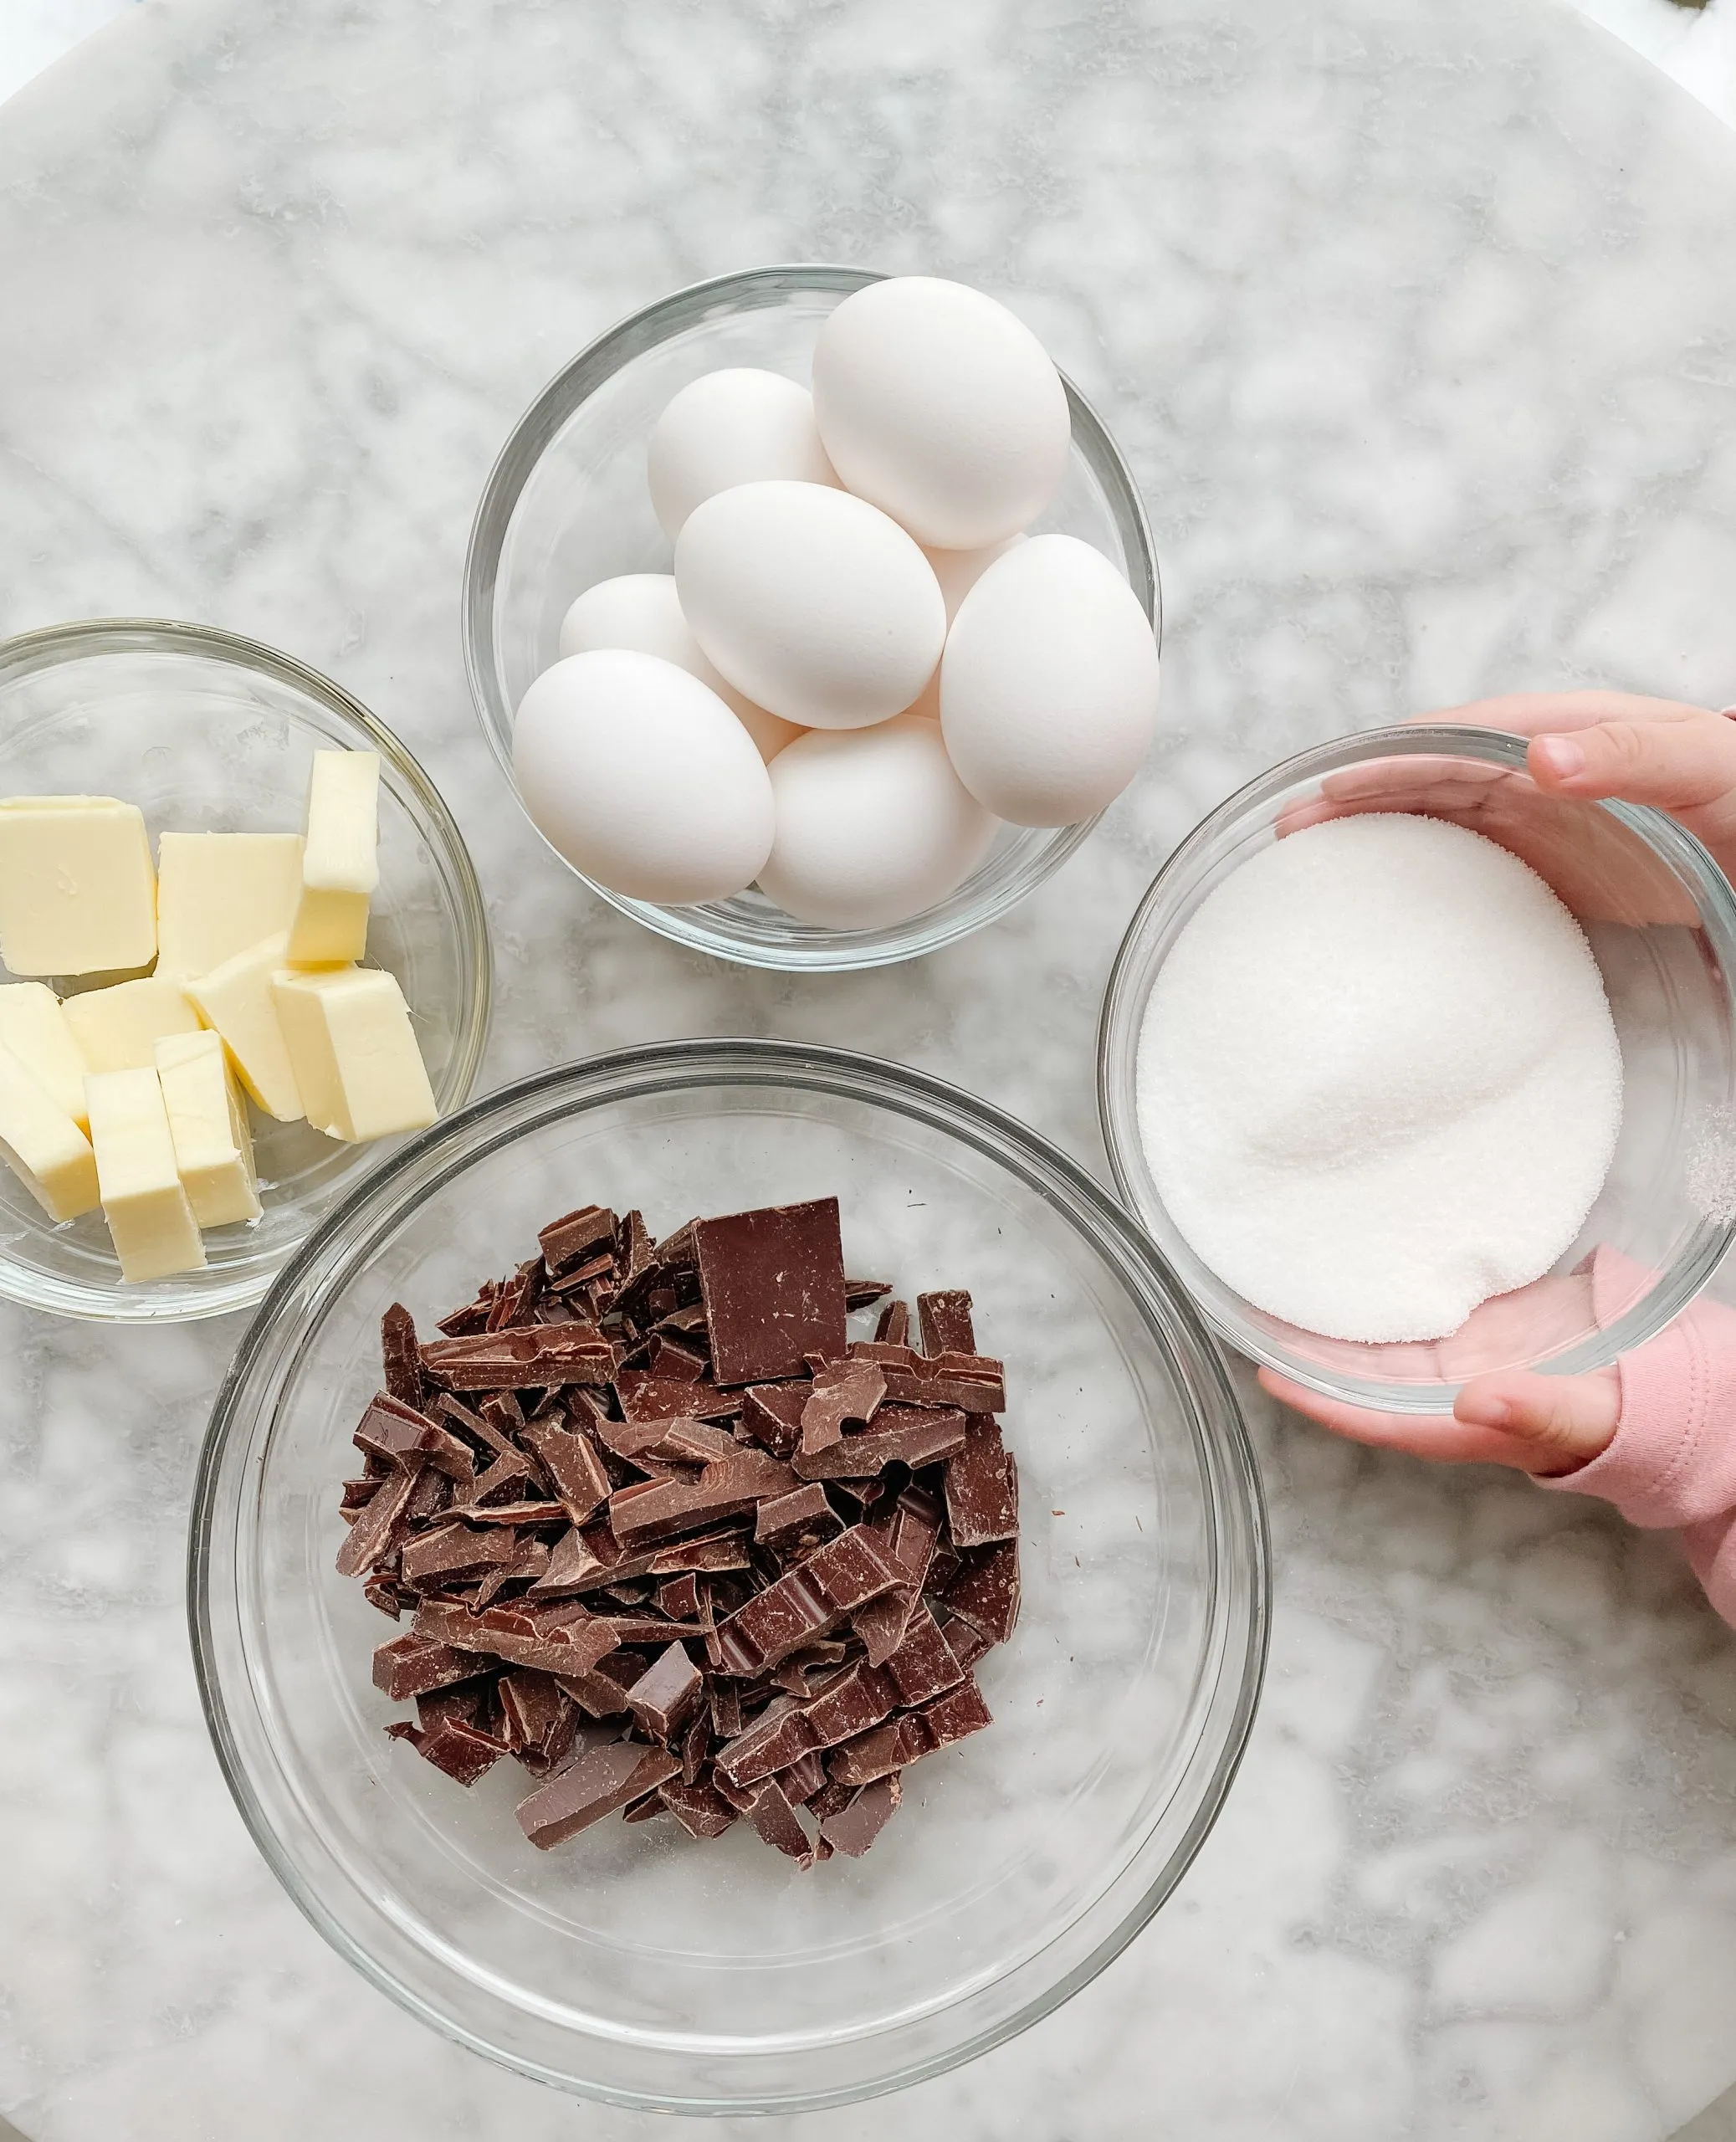 Ingredients for moelleux au chocolat
